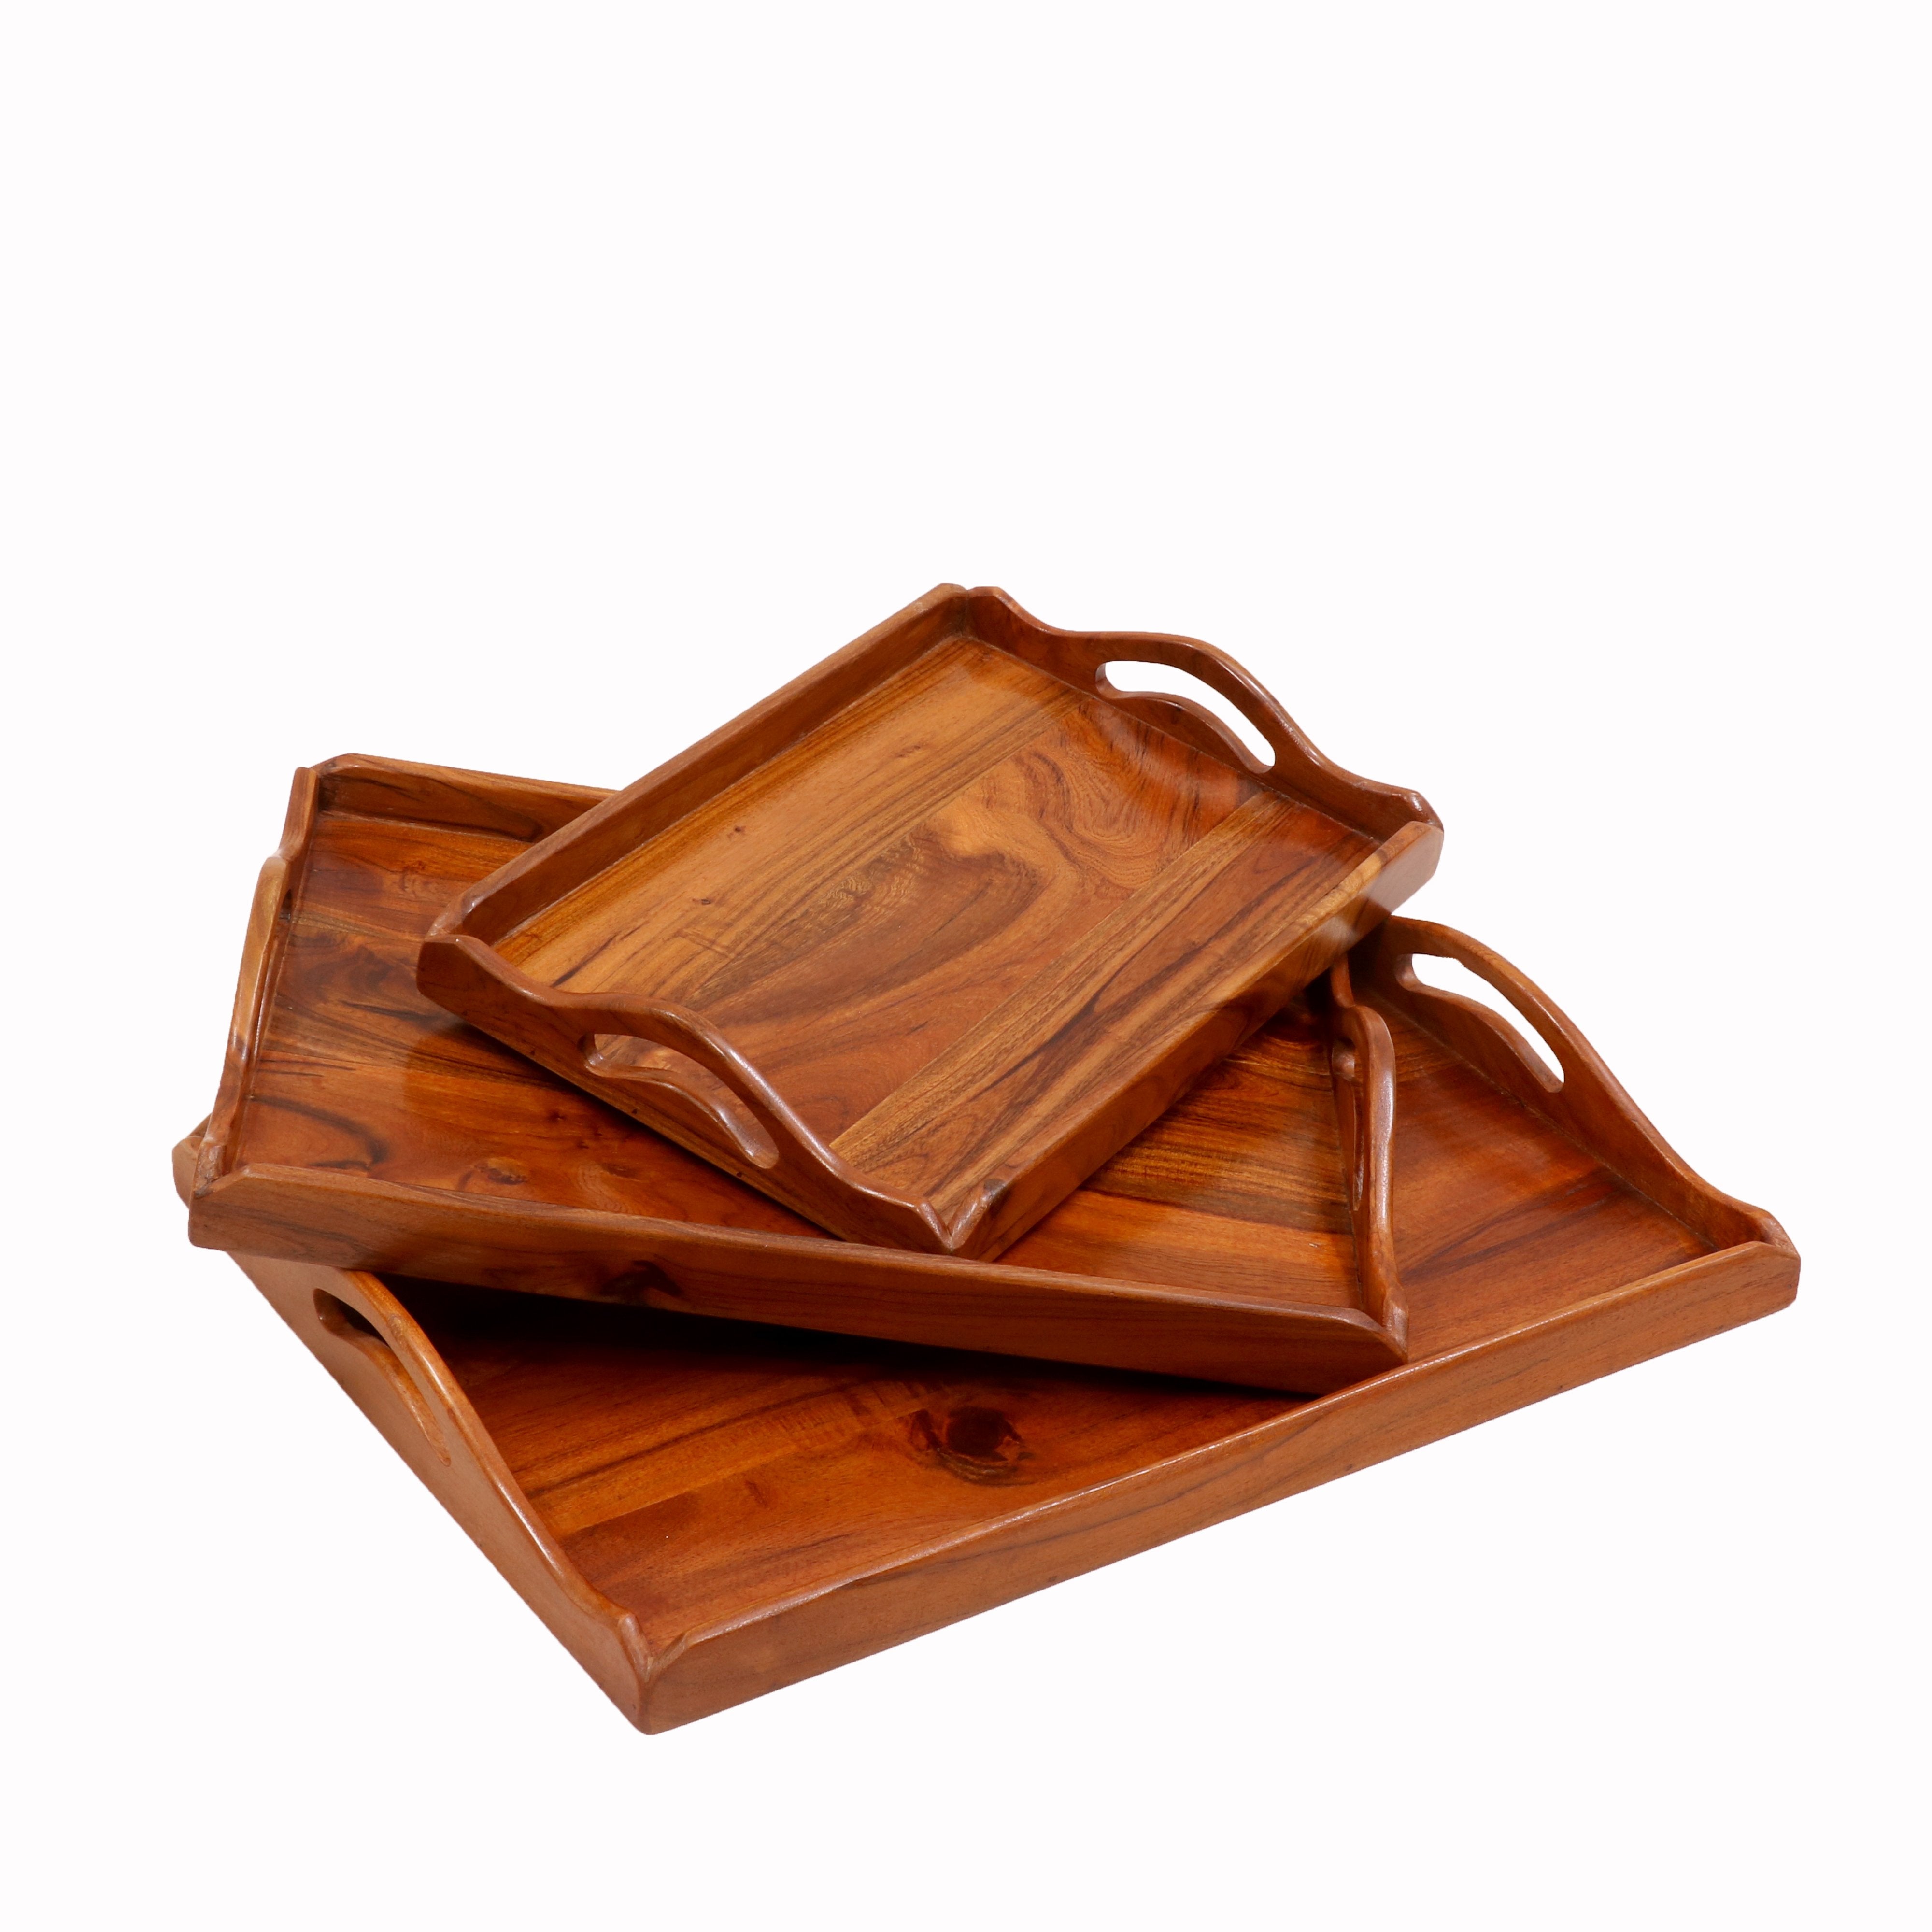 6 DIY Decor ideas for wooden trays